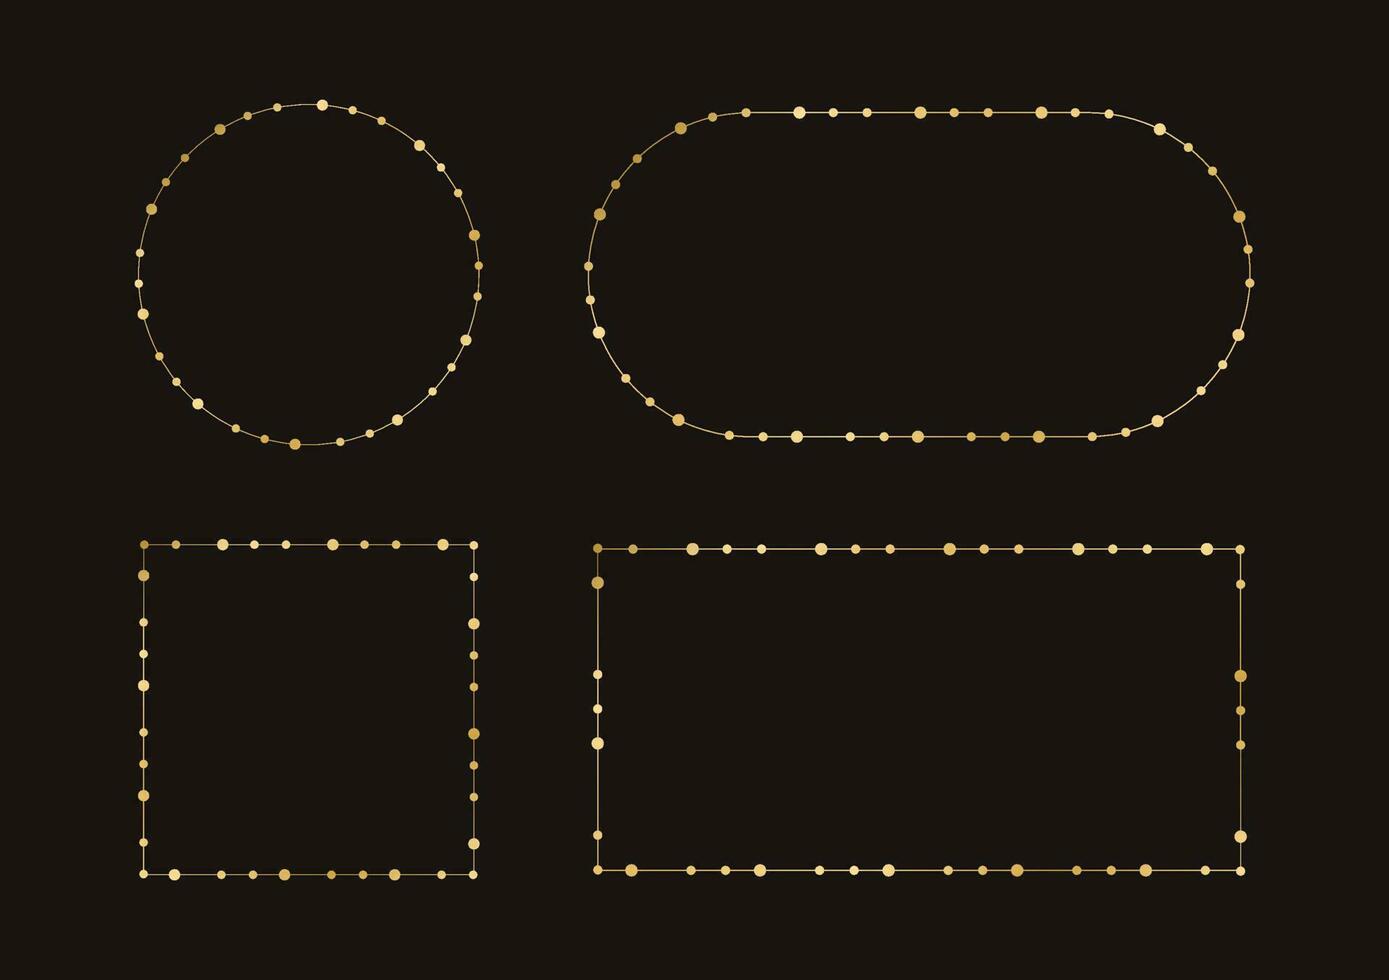 Gold Weihnachten Fee Beleuchtung Rahmen Rand Satz. abstrakt geometrisch golden Punkte Kreis Rahmen Sammlung. vektor